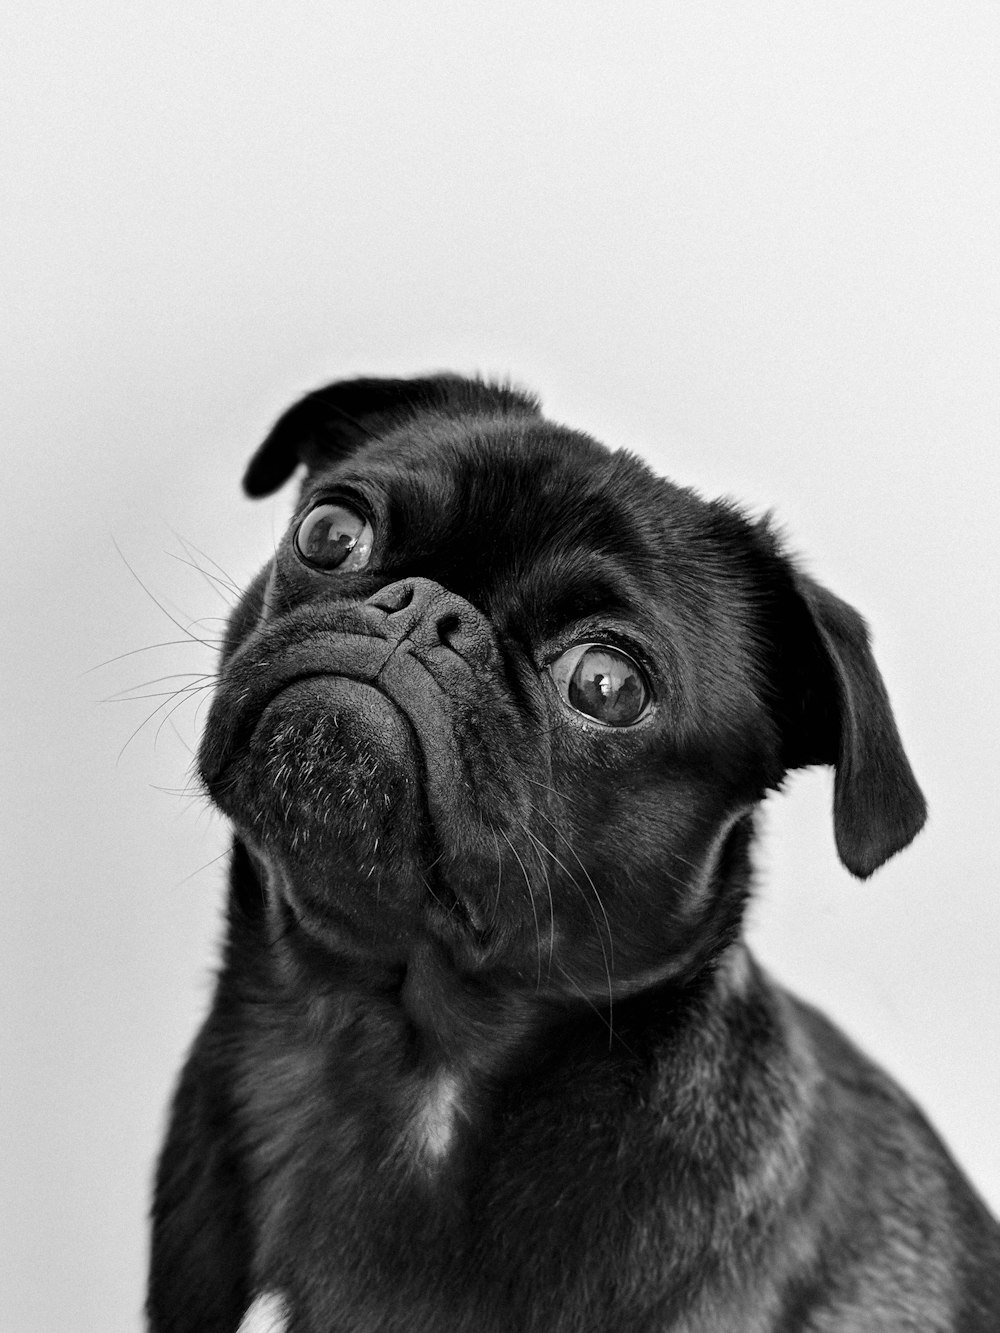 a small black dog looking up at the camera